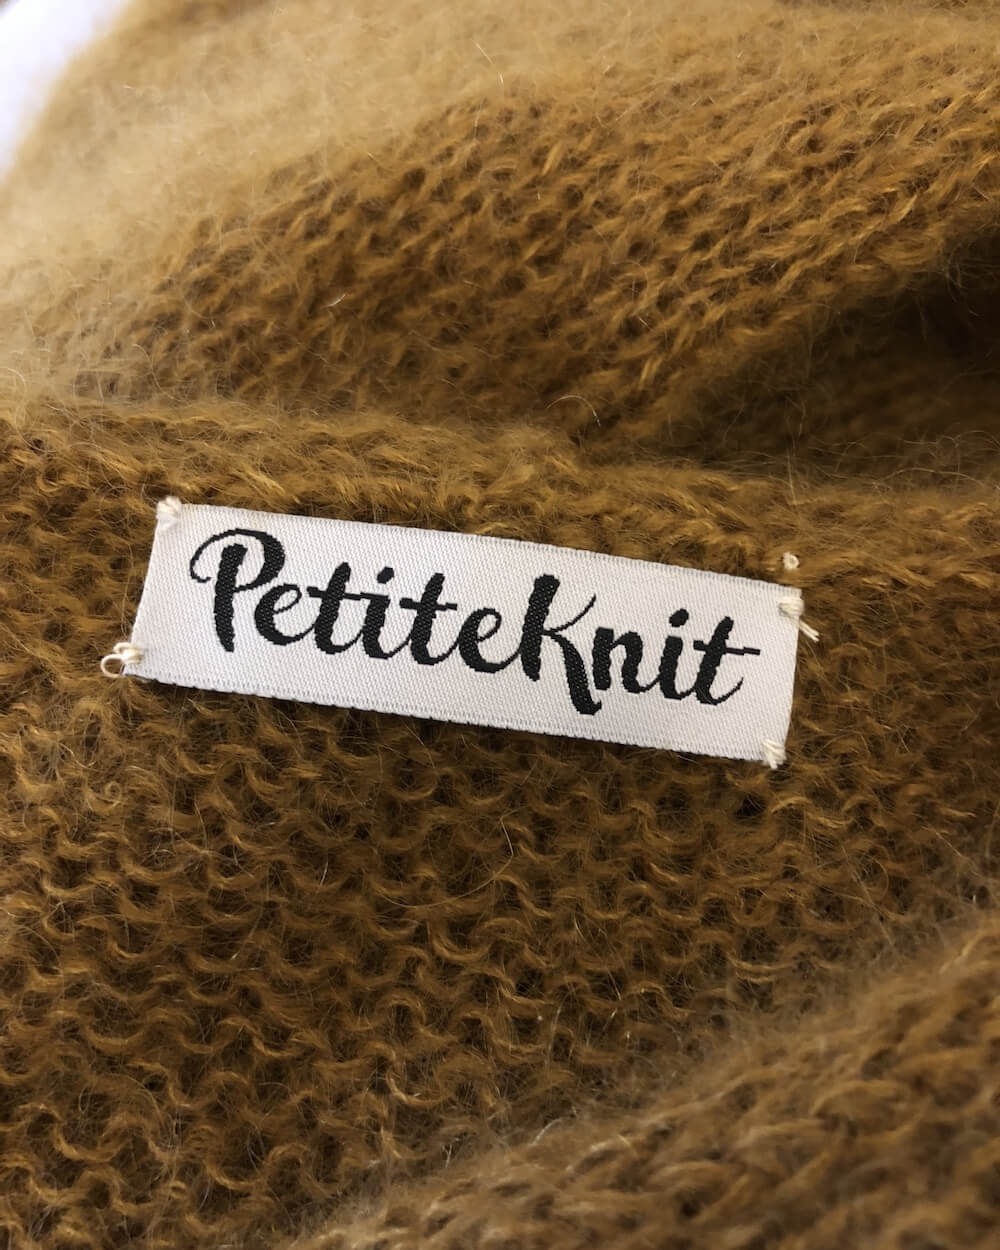 PetiteKnit Label